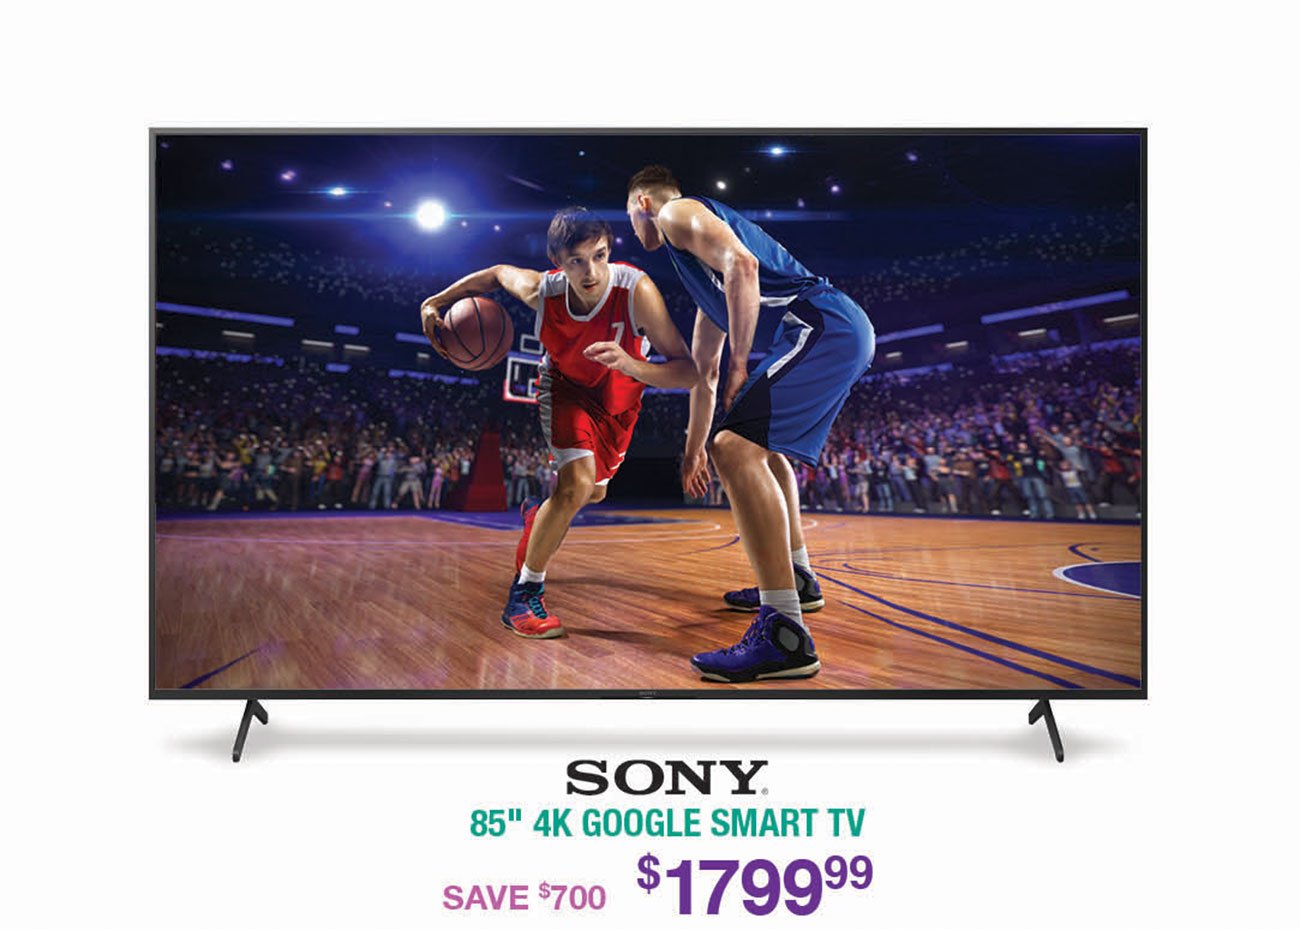 Sony-85-4K-Google-Smart-TV-UIRV